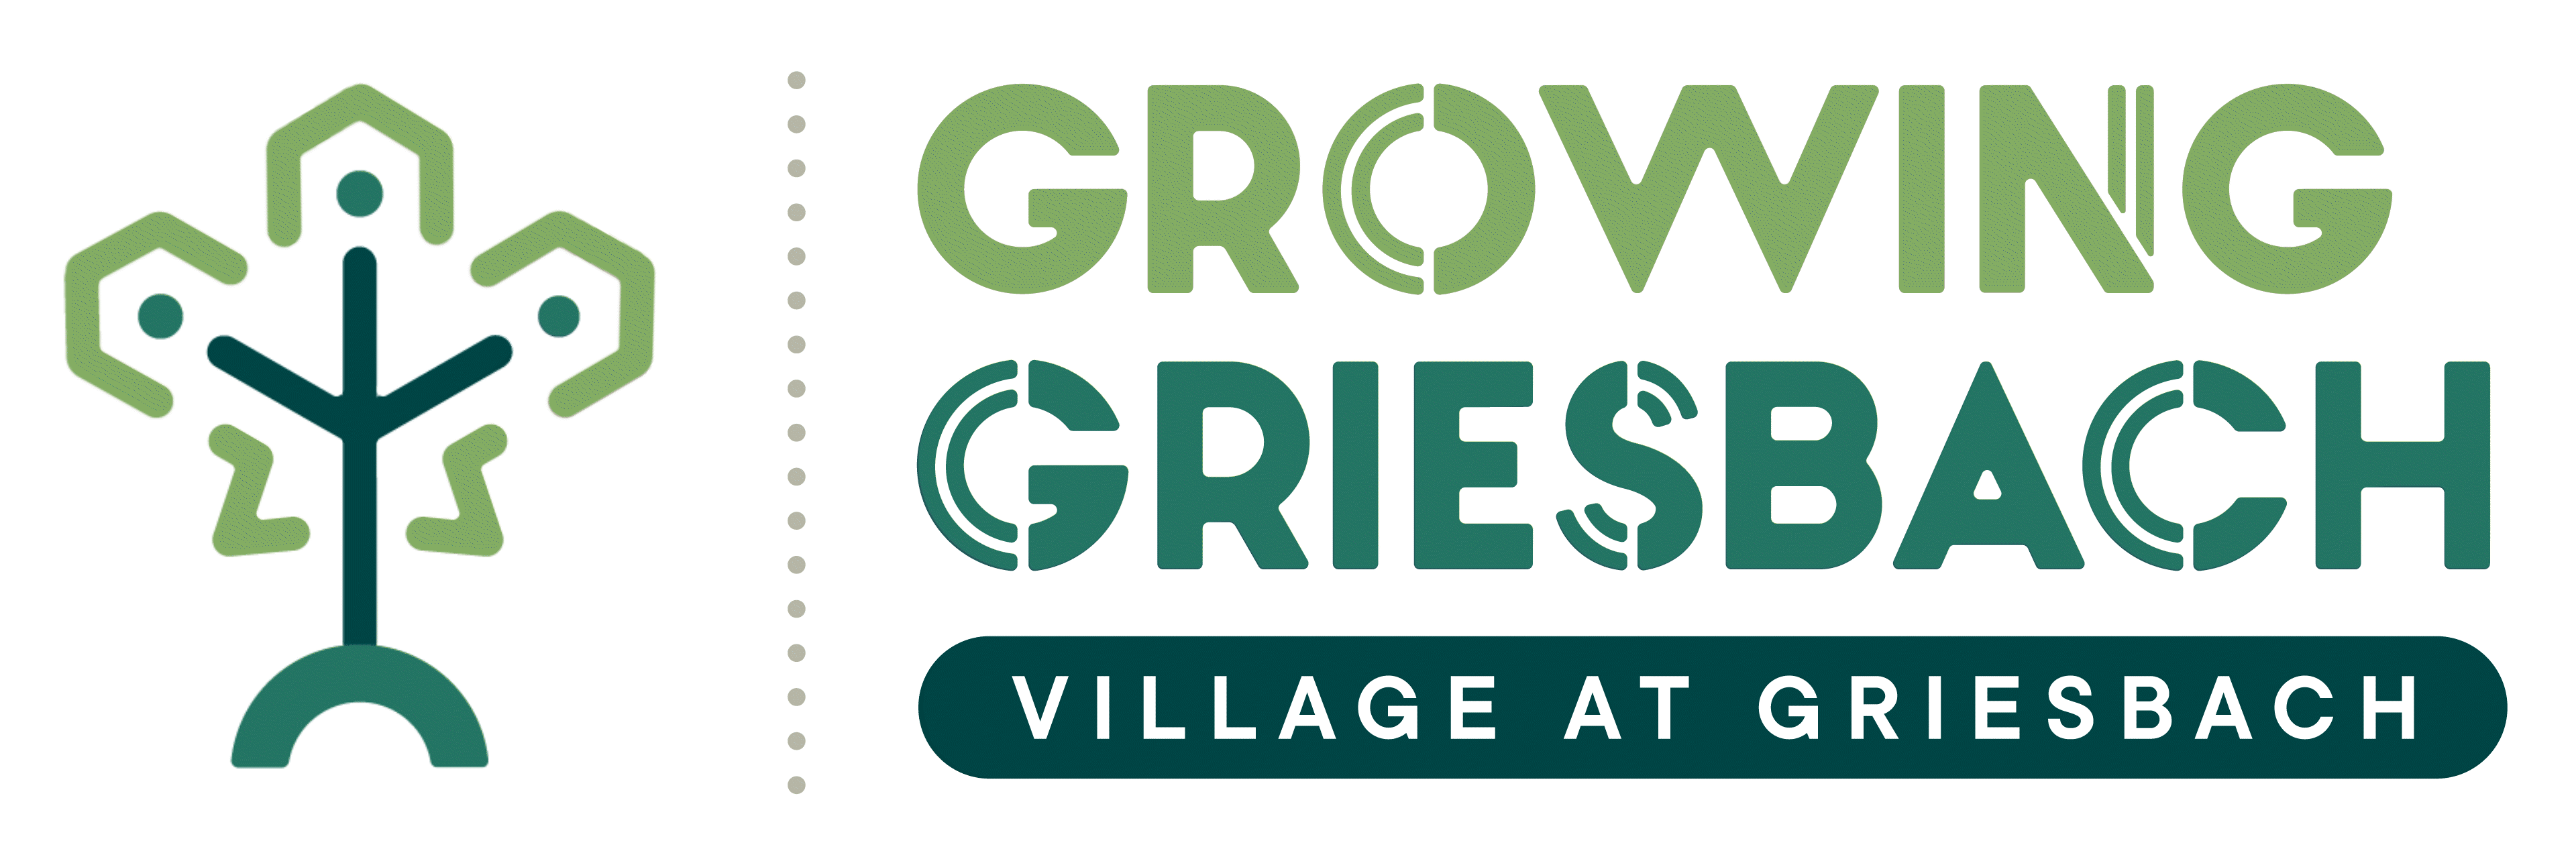 Growing Griesbach | Griesbach En Croissance Logo